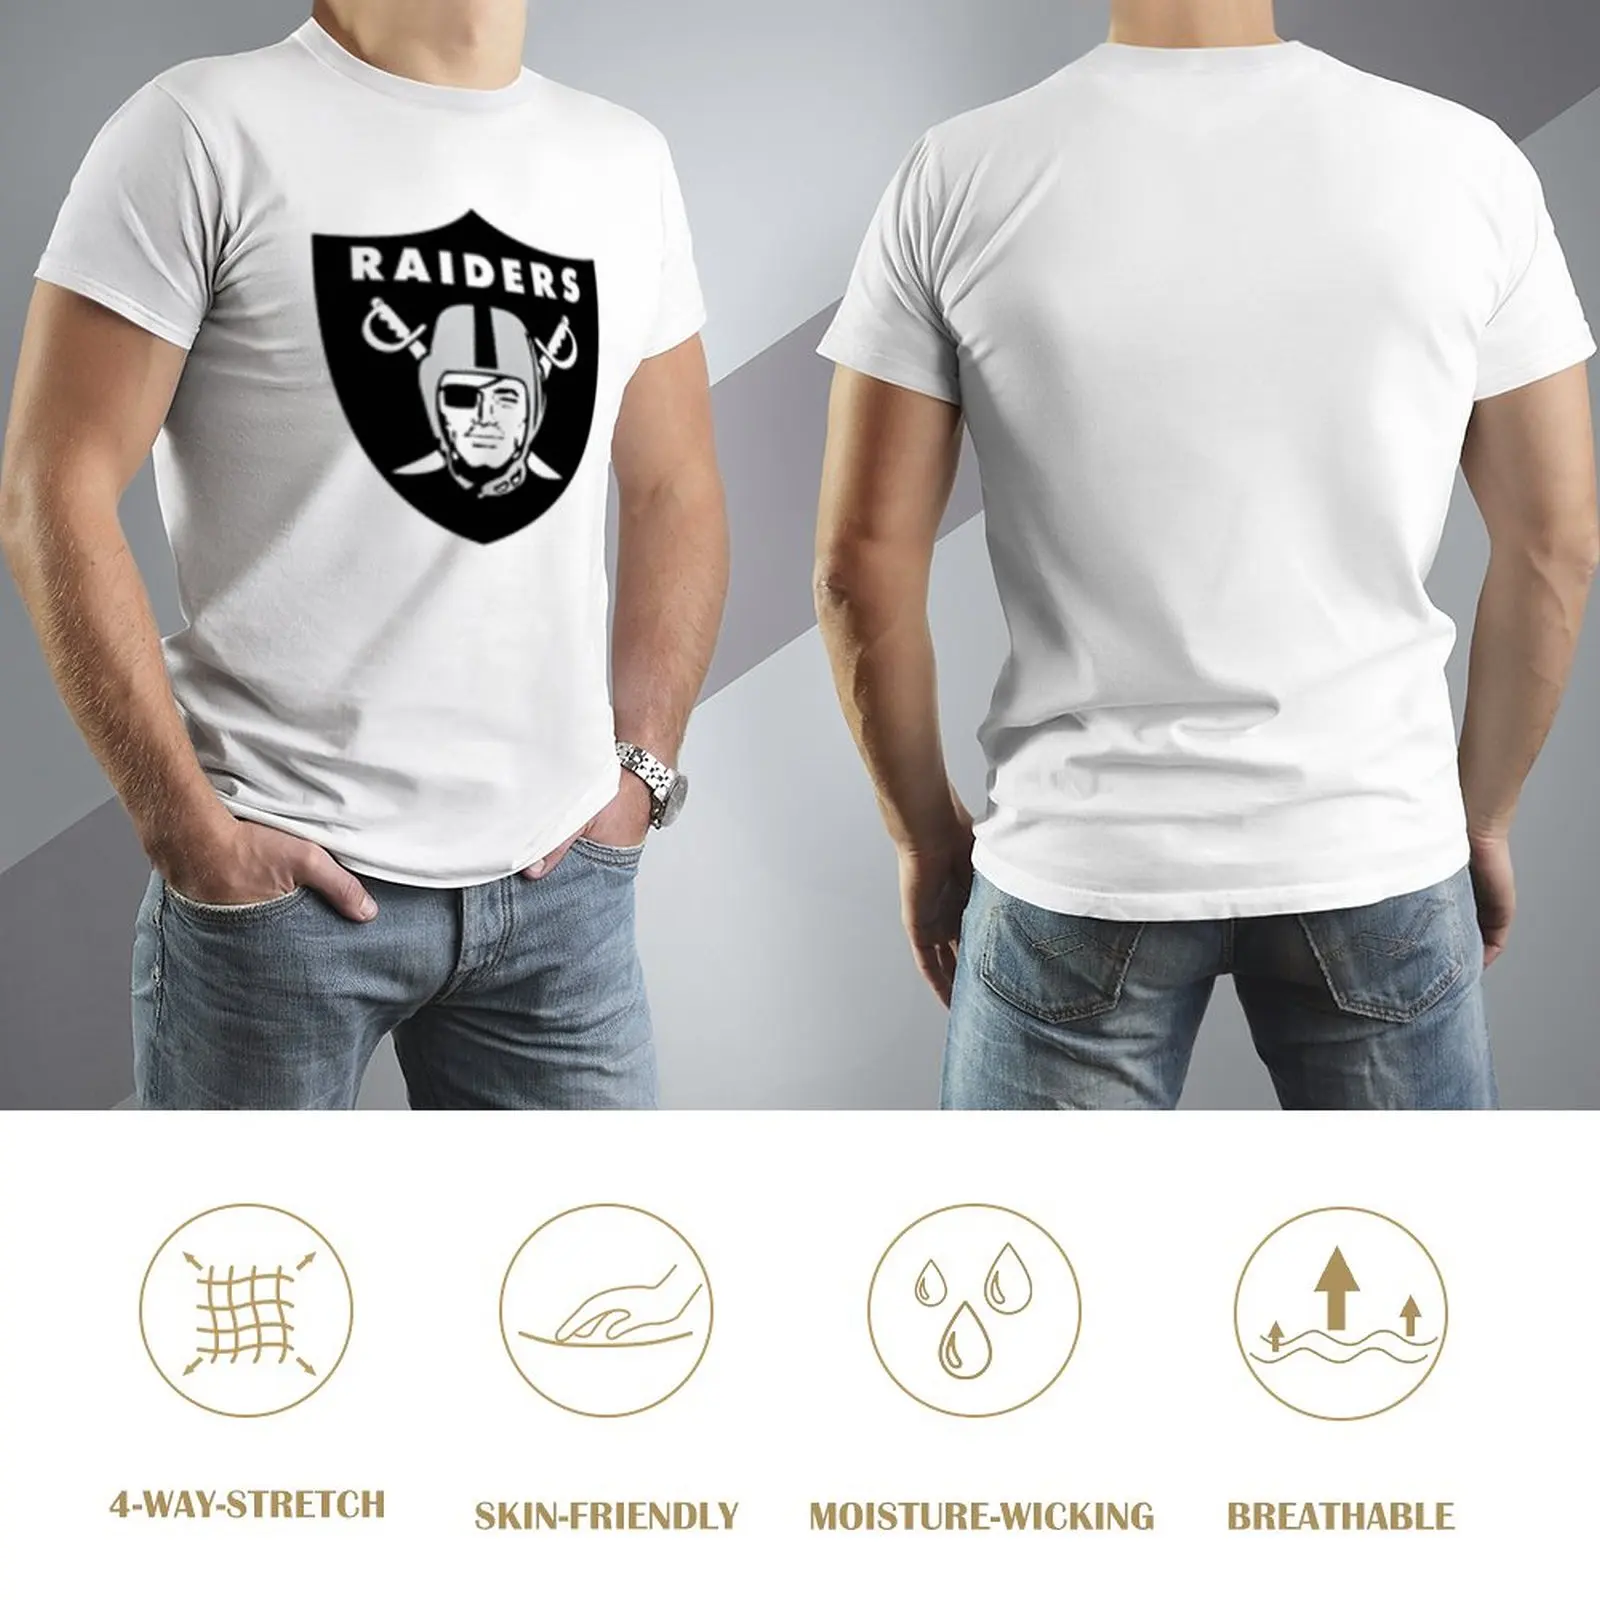 Aliexpress Tusken Raider Raiders T-Shirt Plain T-Shirt Cat Shirts Designer T Shirt Men